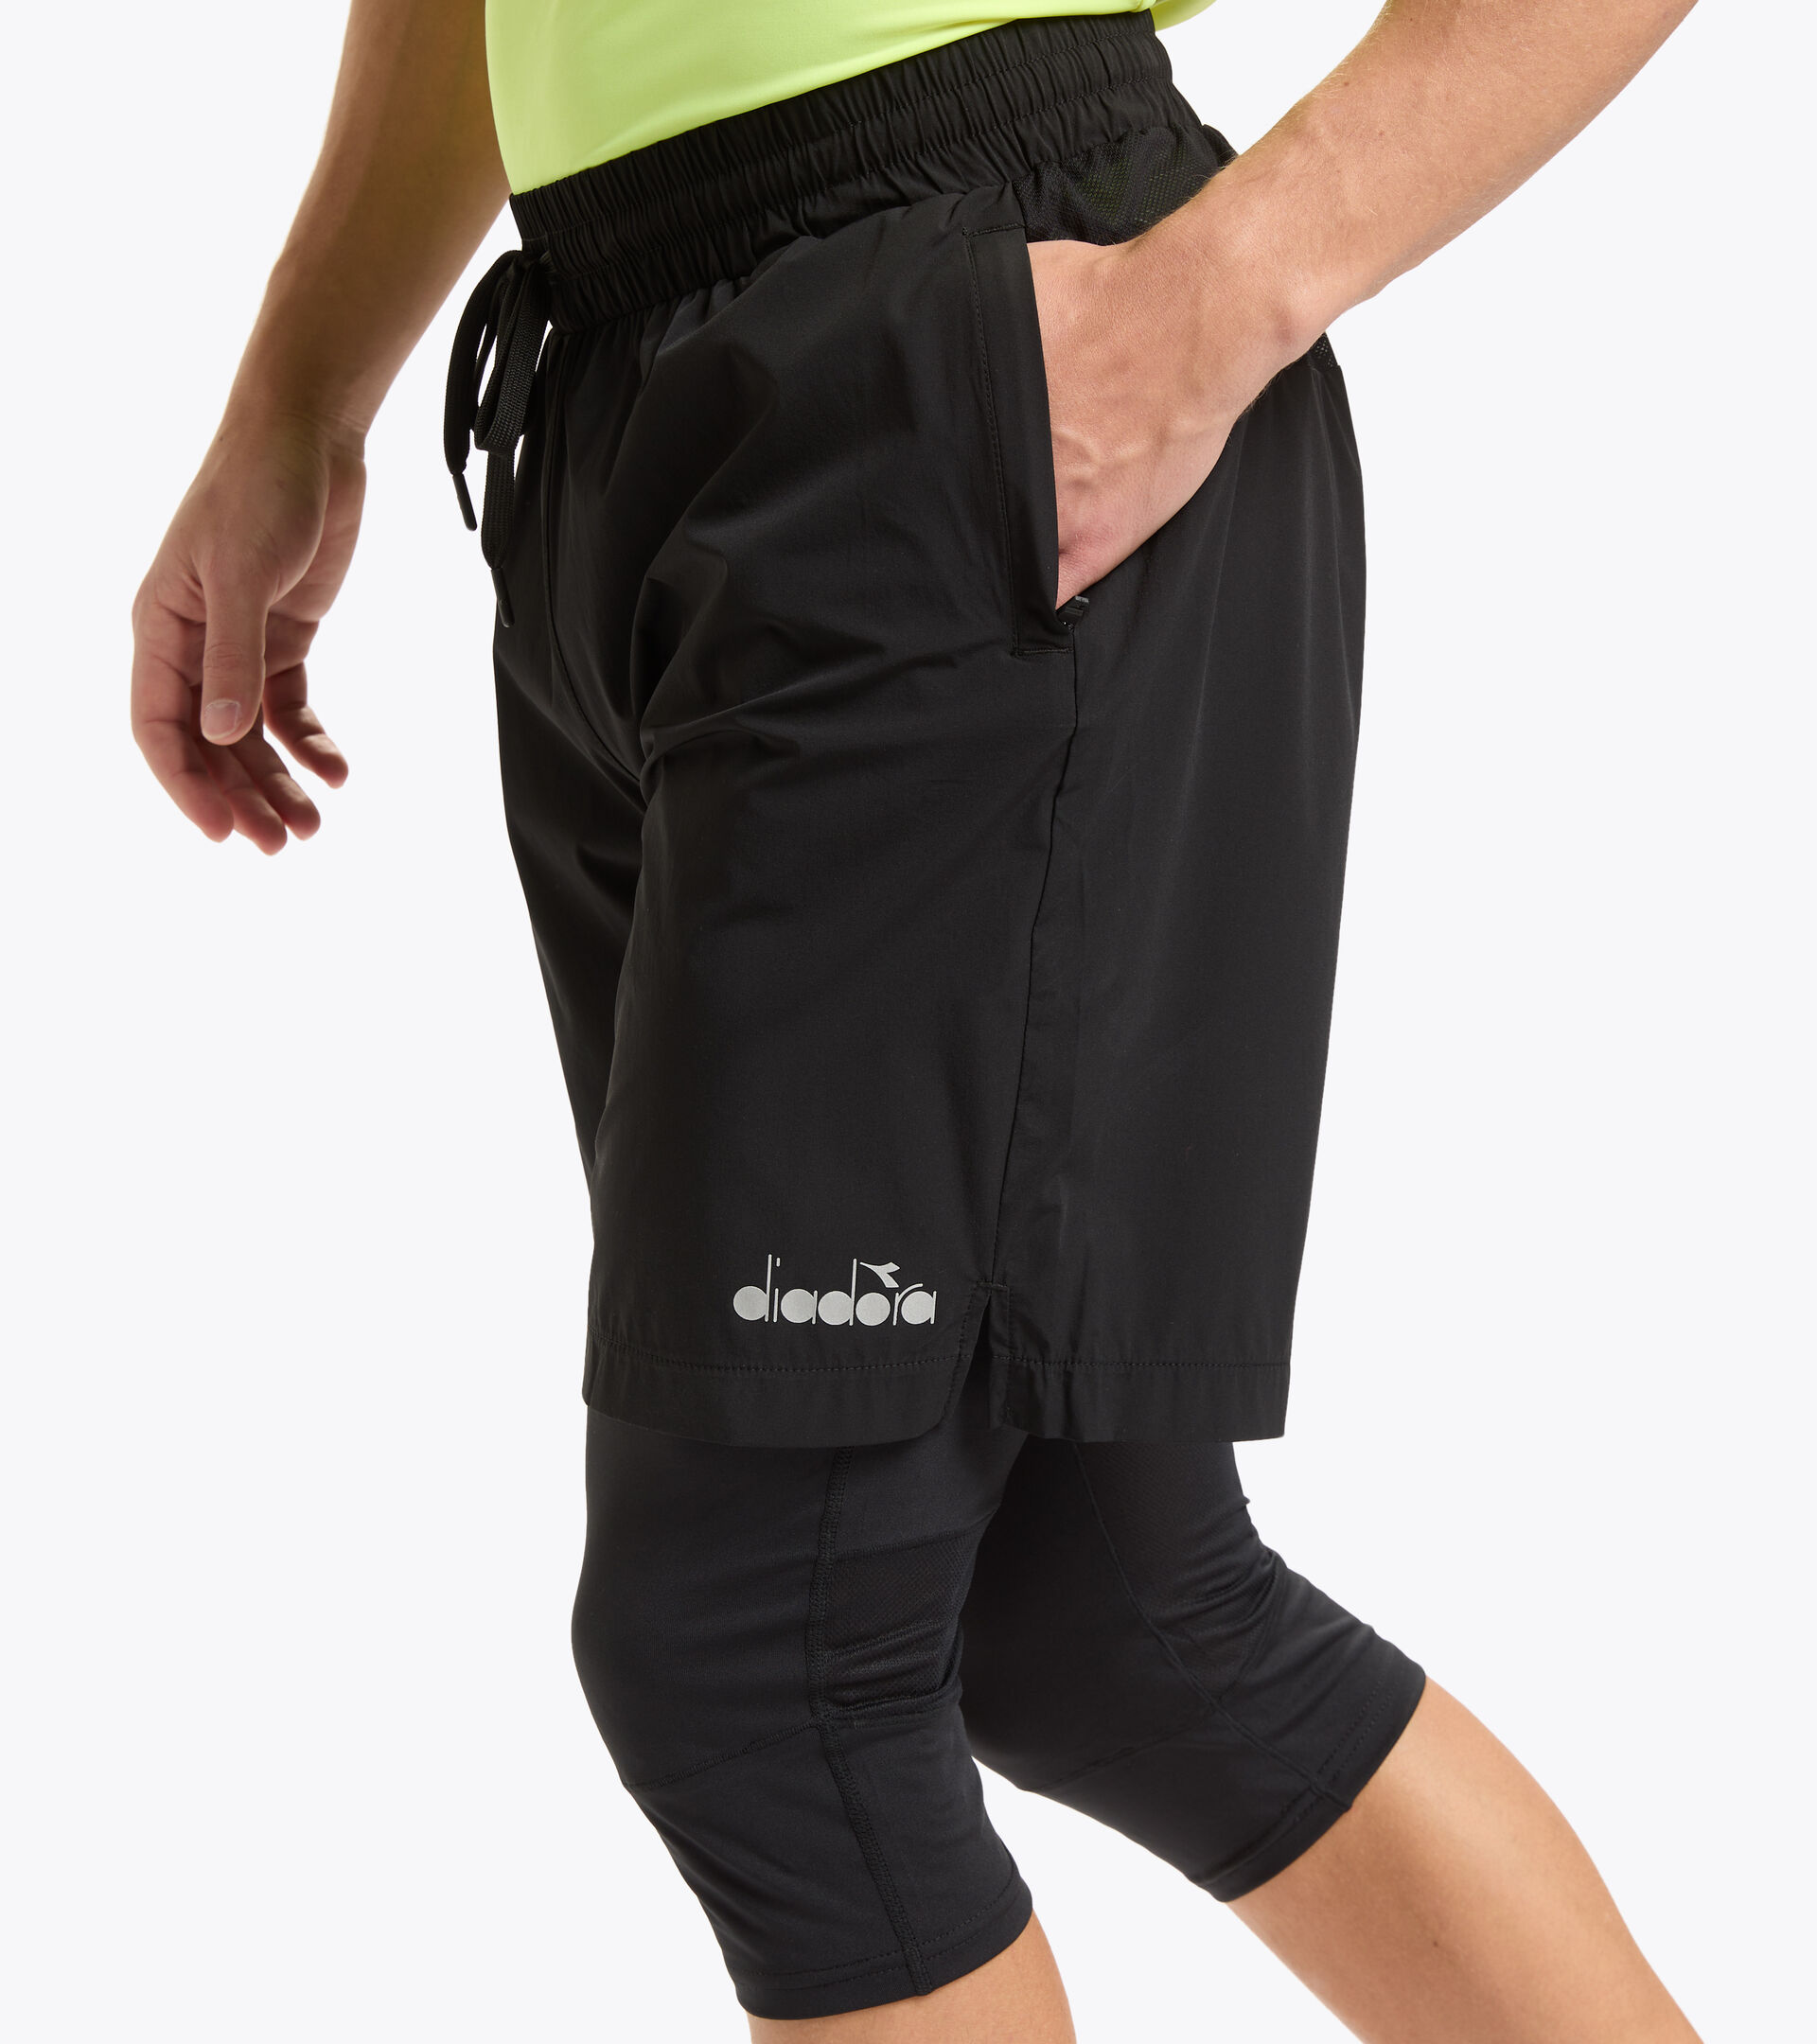 POWER SHORTS BE ONE Leggings with detachable shorts running set - Men -  Diadora Online Store US